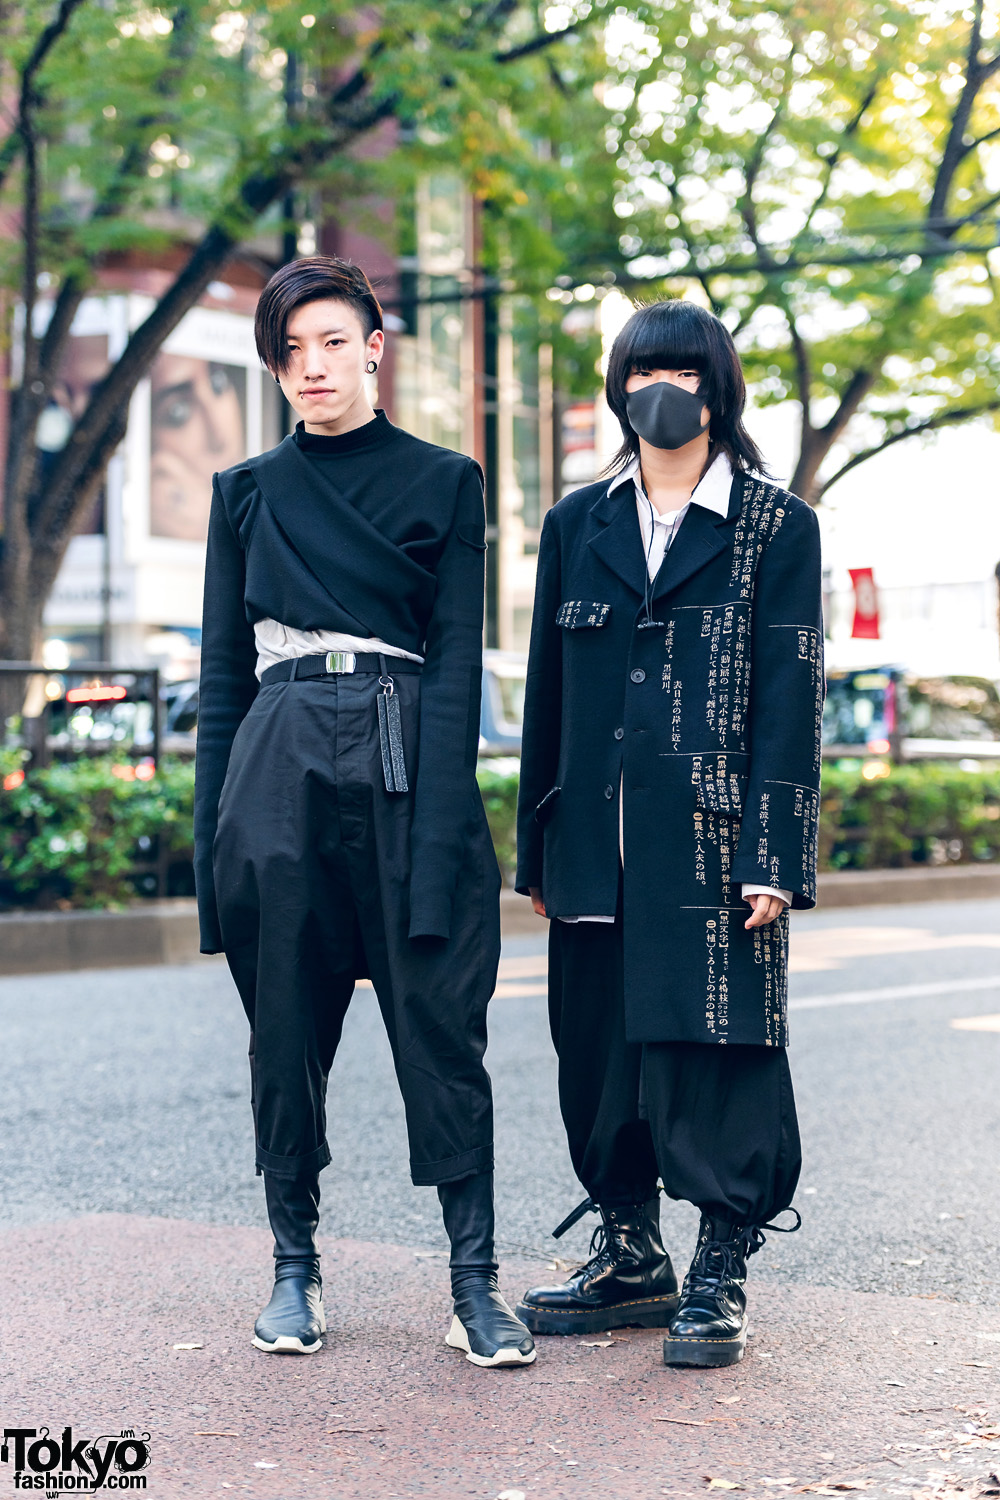 Rick Owens & Yohji Yamamoto Pour Homme Monochrome Japanese Street Styles w/ Mask, Kanji Print Coat, Jodhpur Pants & Dr. Martens Boots